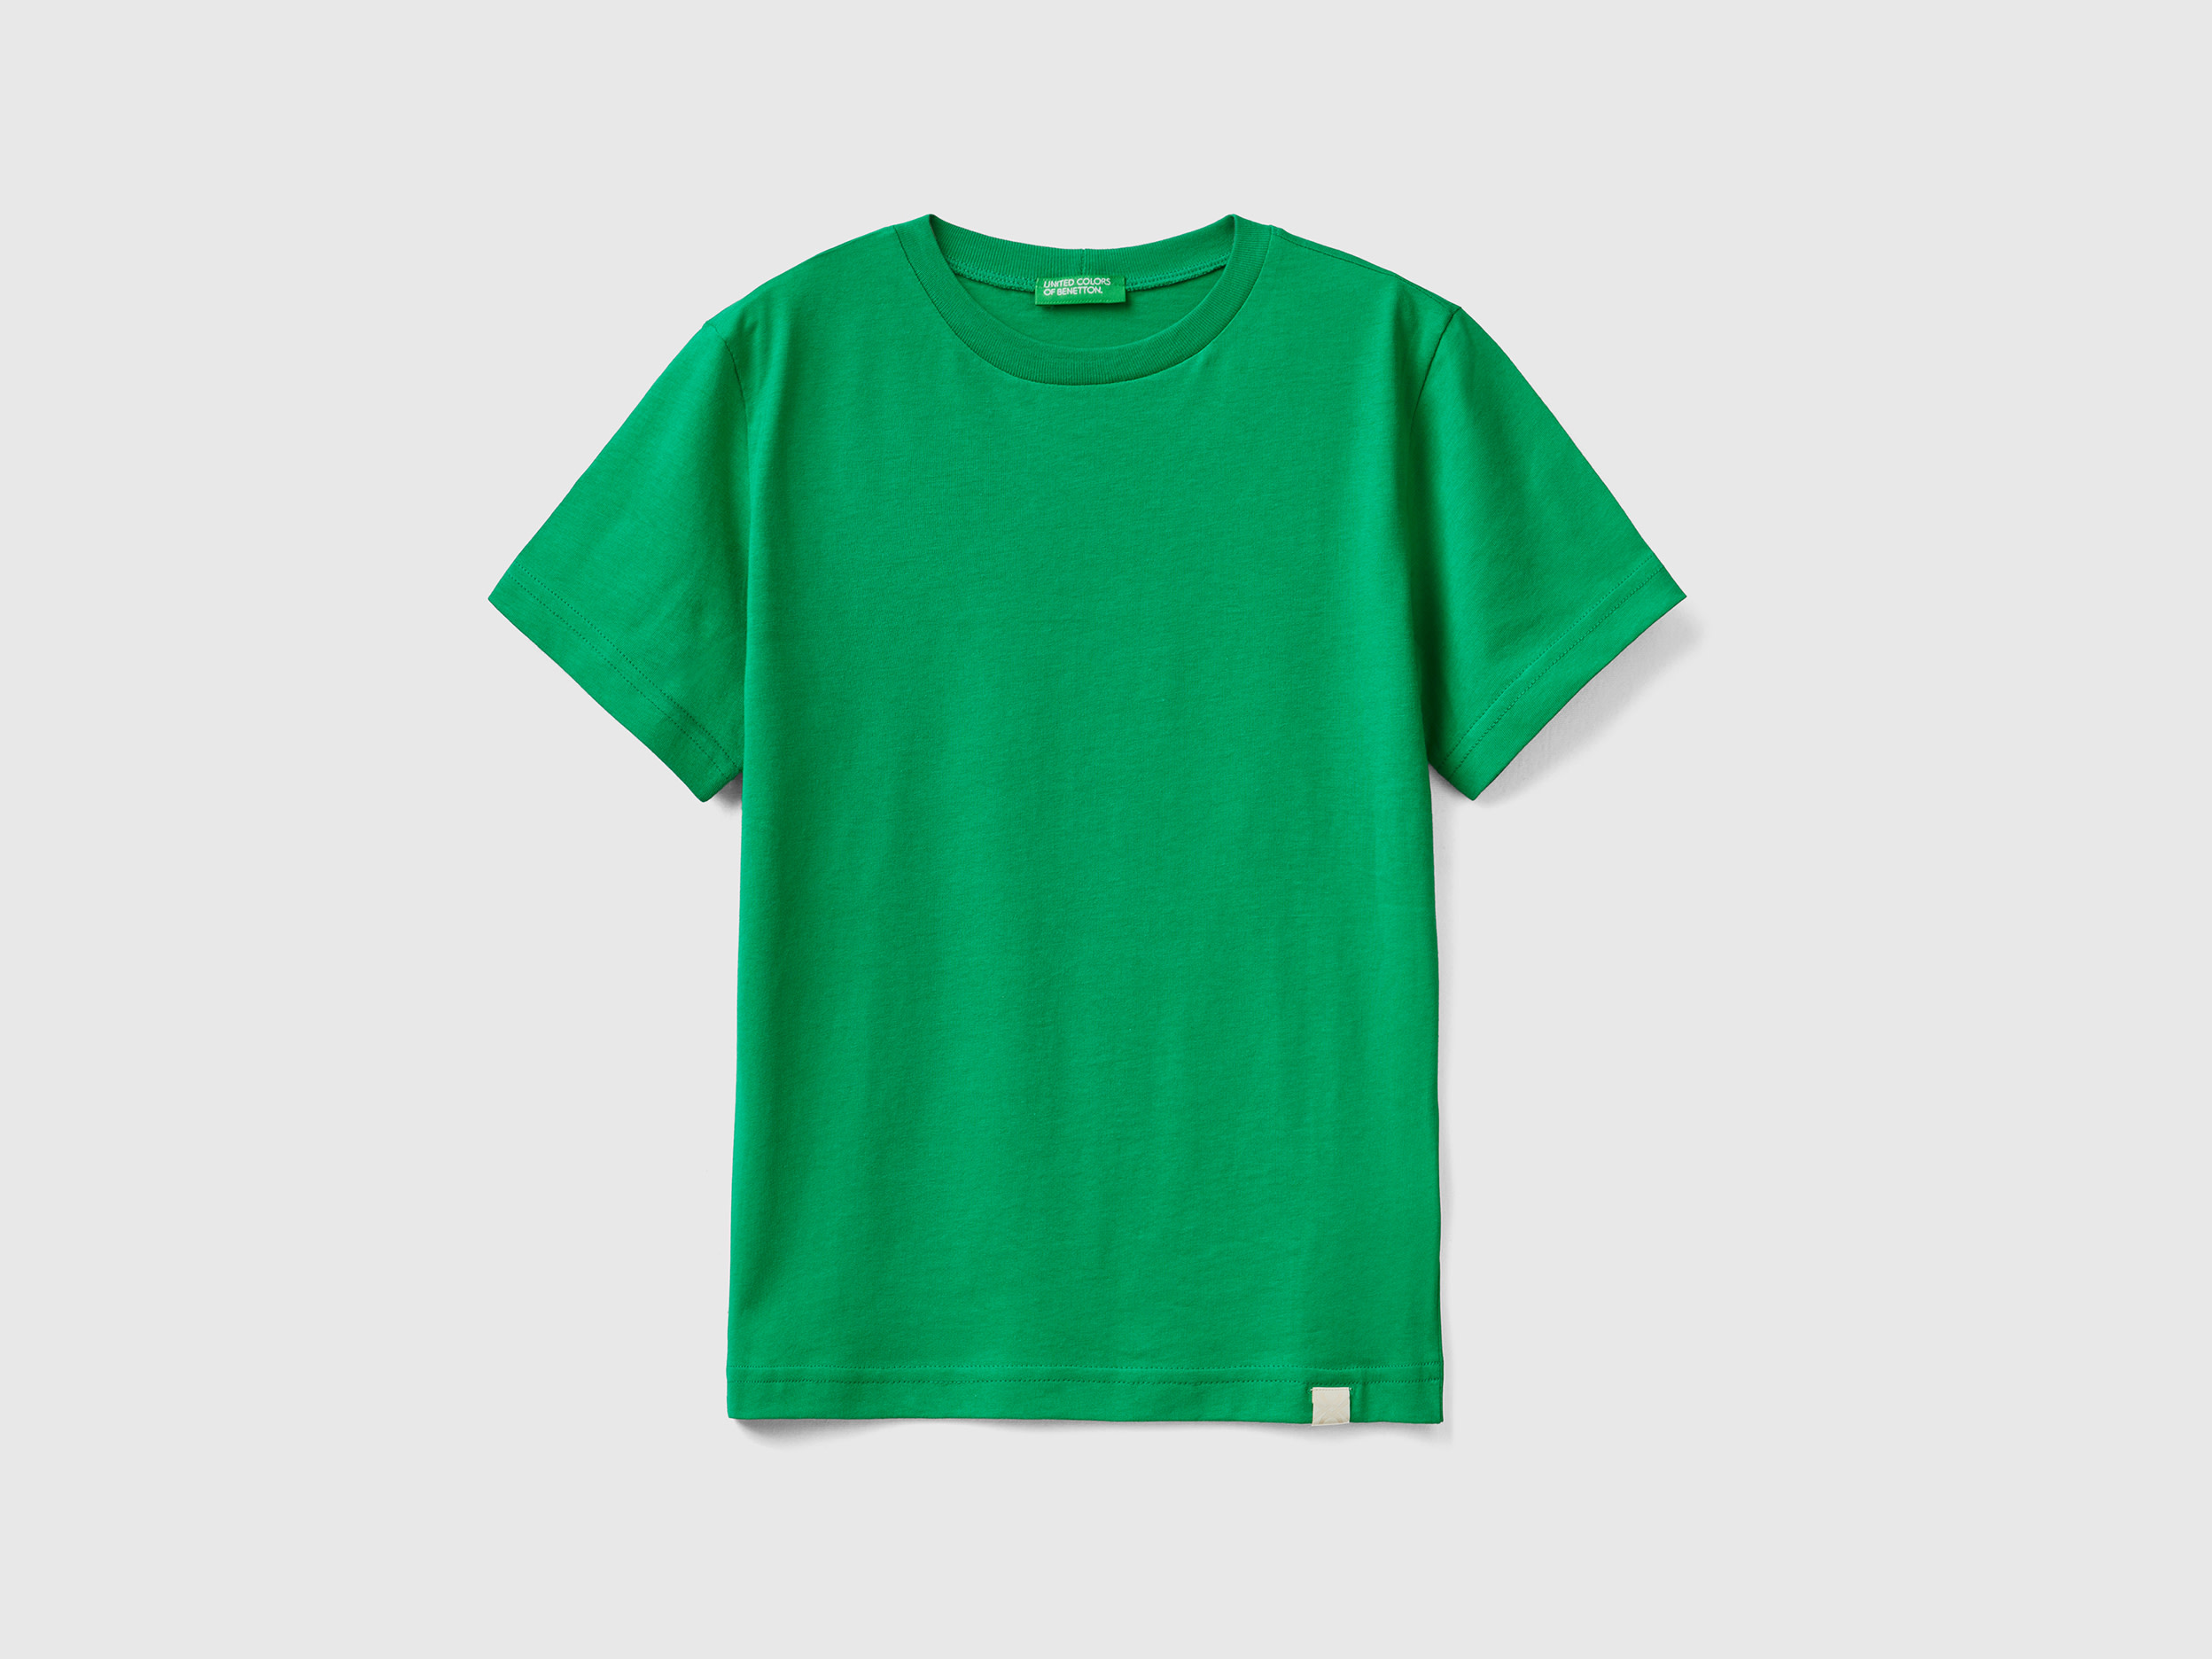 Image of Benetton, Organic Cotton T-shirt, size 3XL, Green, Kids